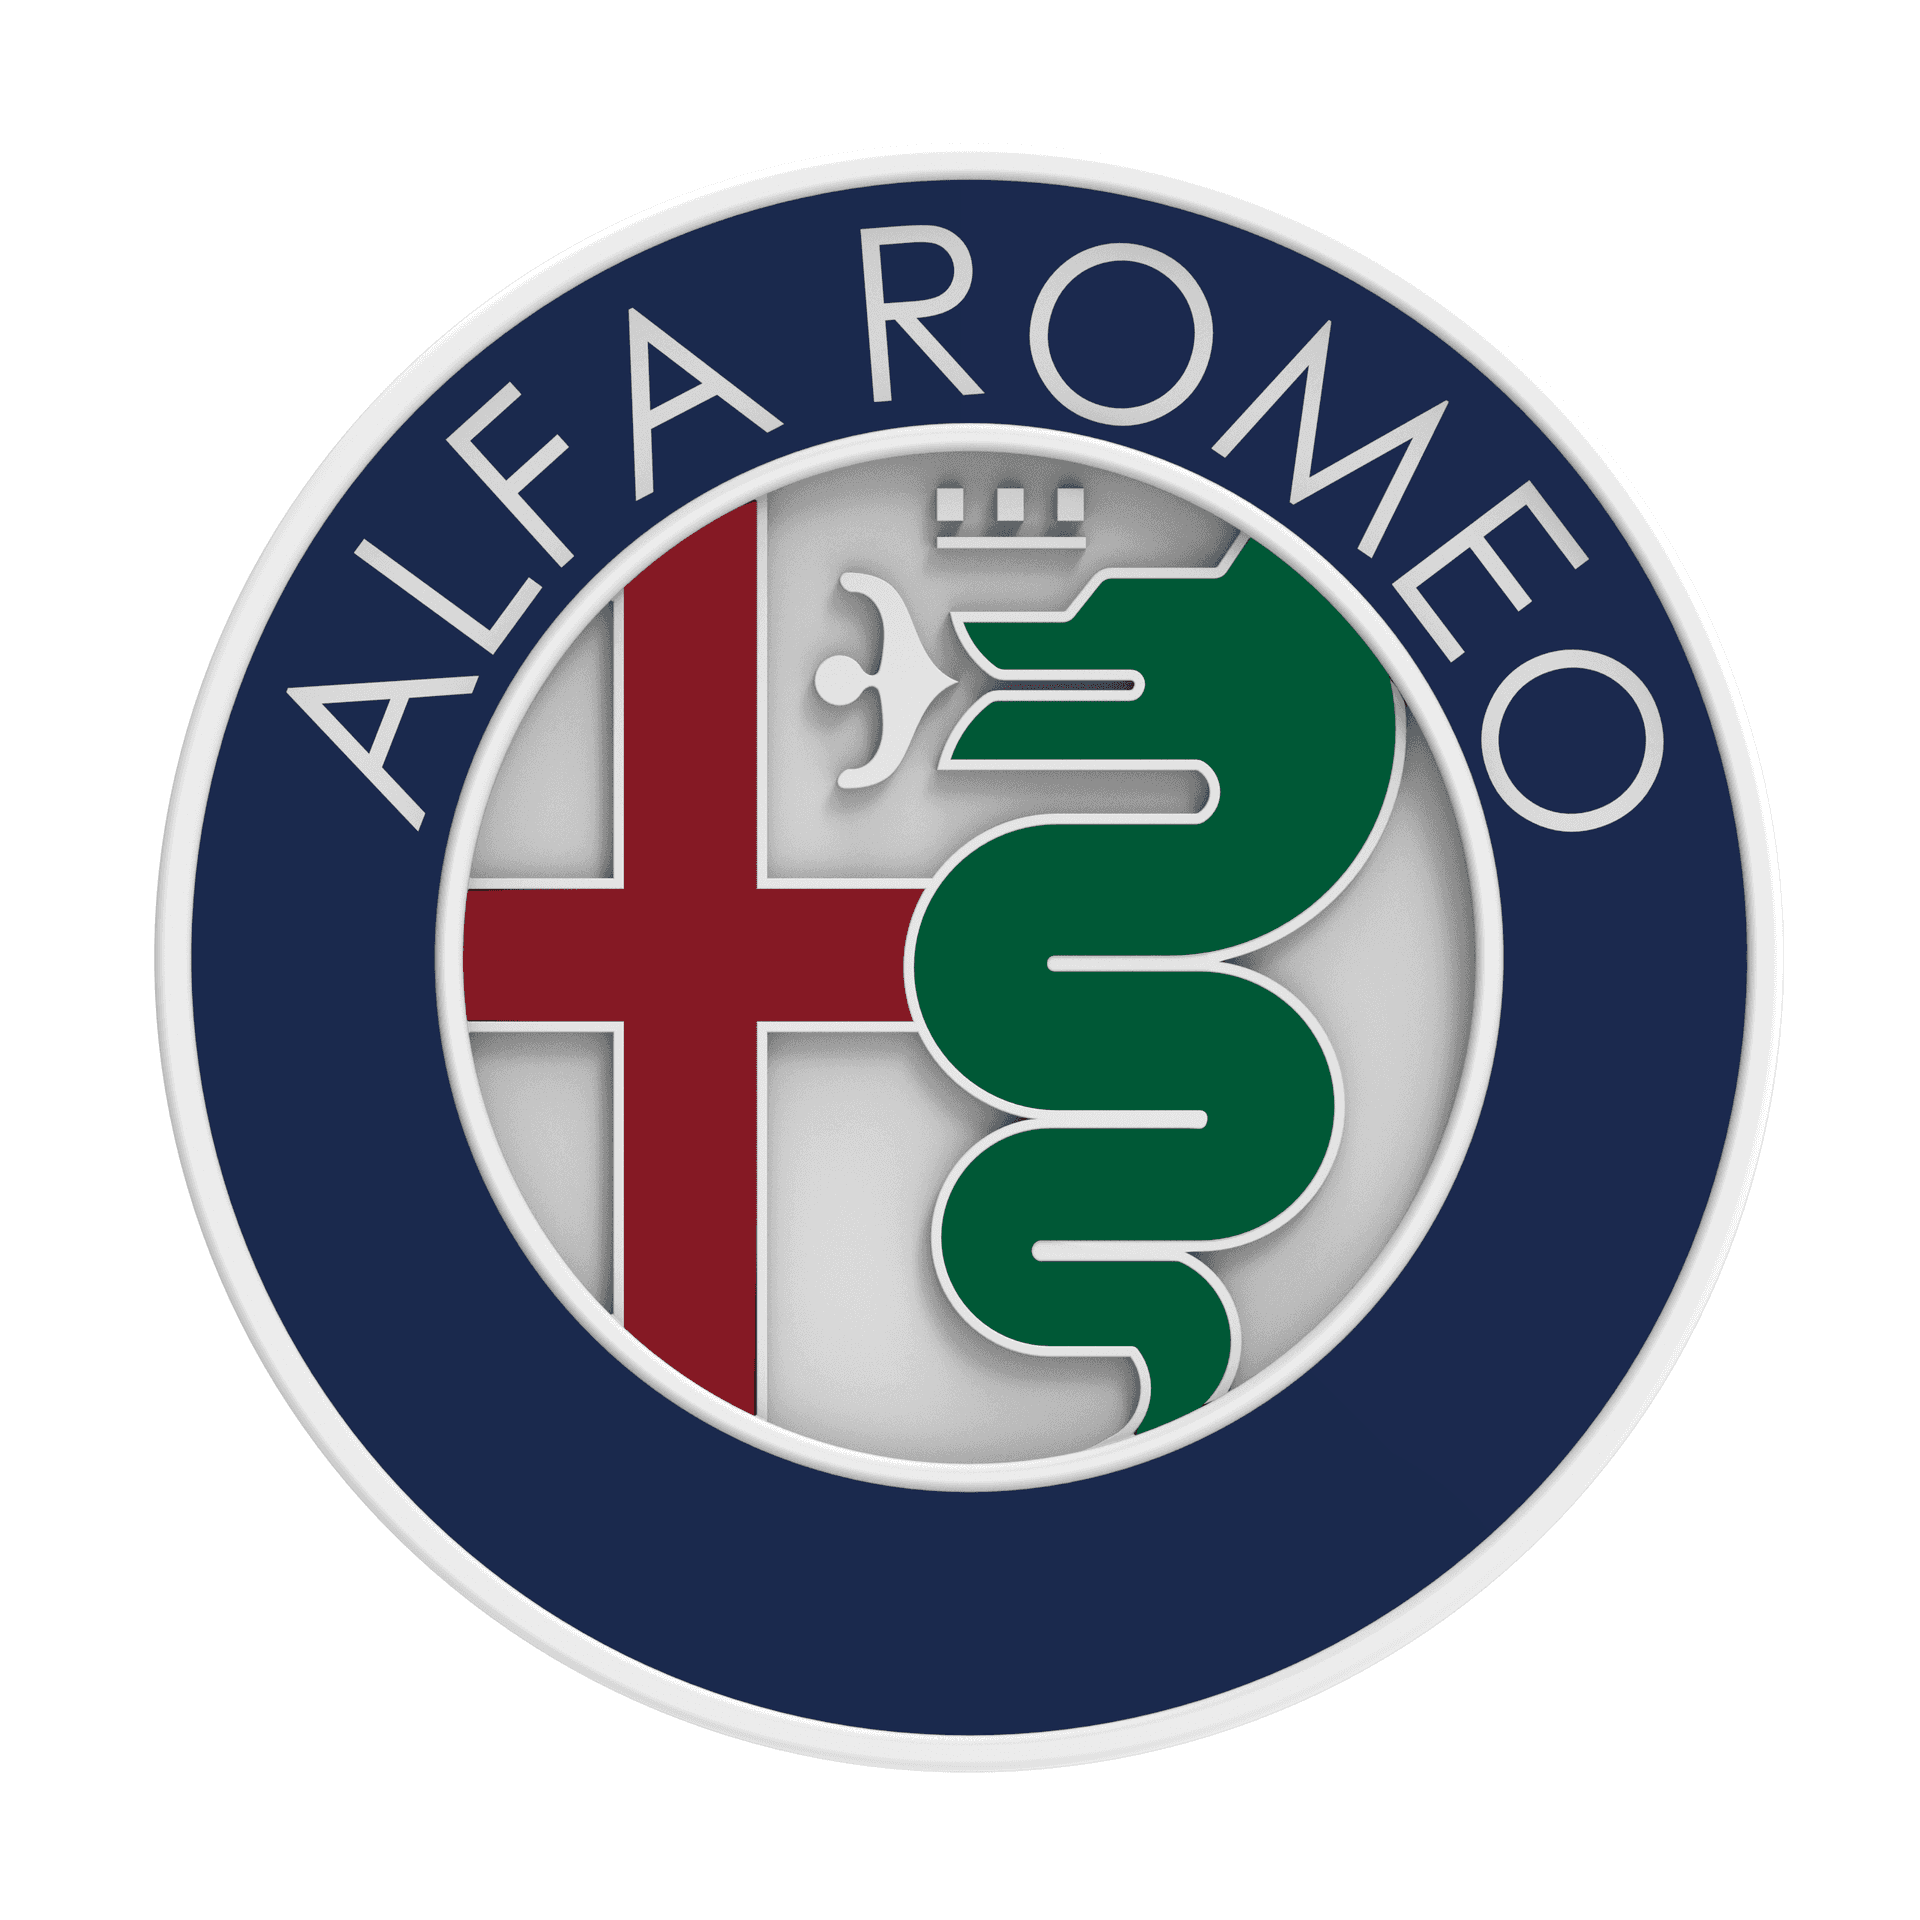 Alfa Romeo logo - 3D model by 3dcaddesignwork on Thangs